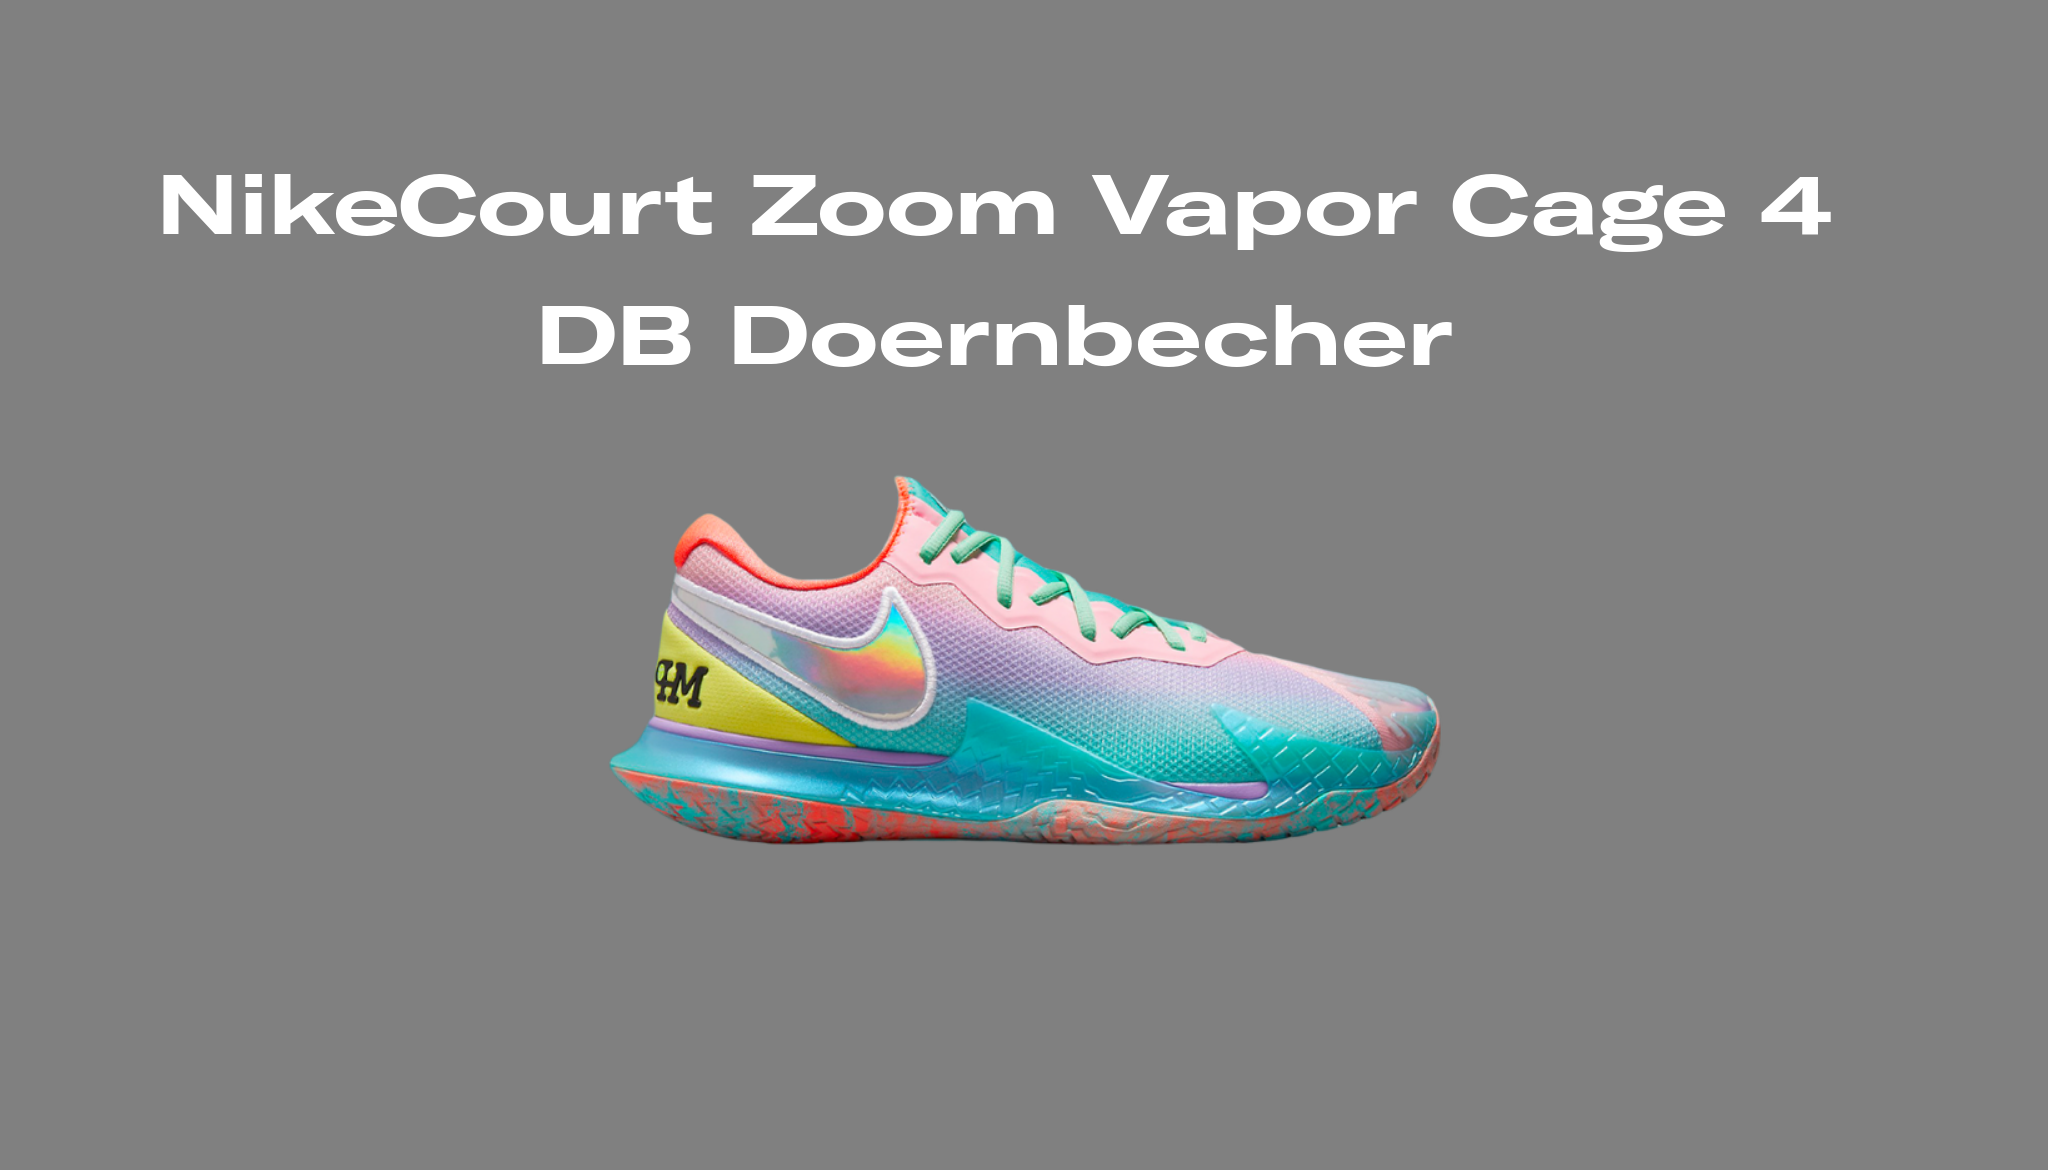 NikeCourt Zoom nike zoom vapor cage Vapor Cage 4 DB Doernbecher, Raffles and Release